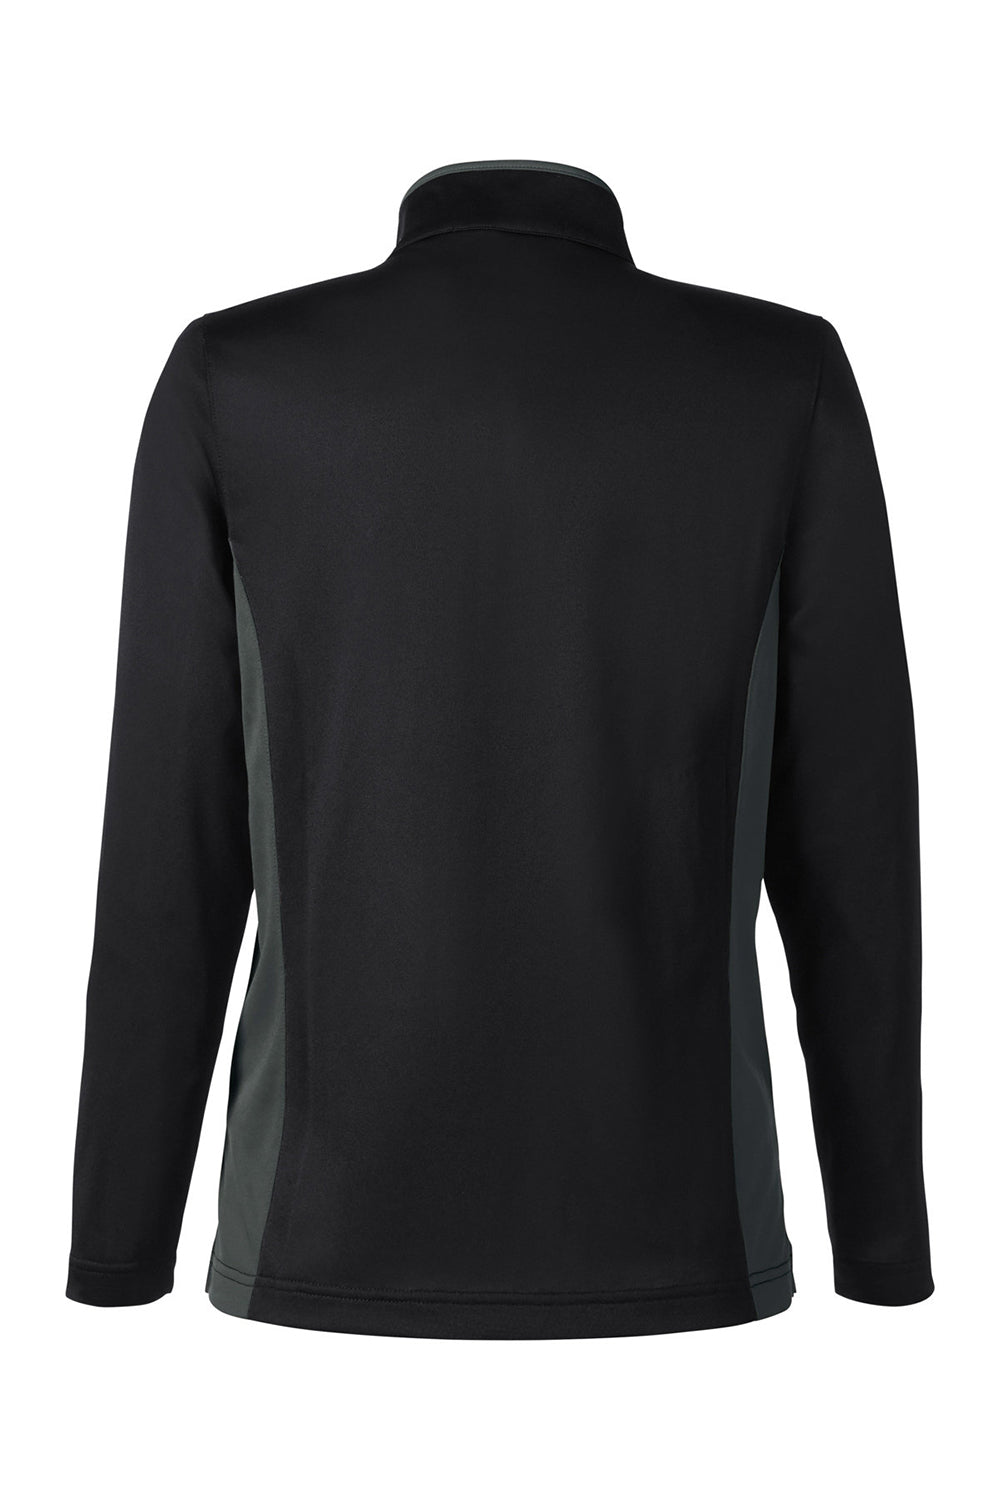 Harriton M786W Womens Flash Performance Moisture Wicking Colorblock 1/4 Zip Sweatshirt Black/Dark Charcoal Grey Flat Back